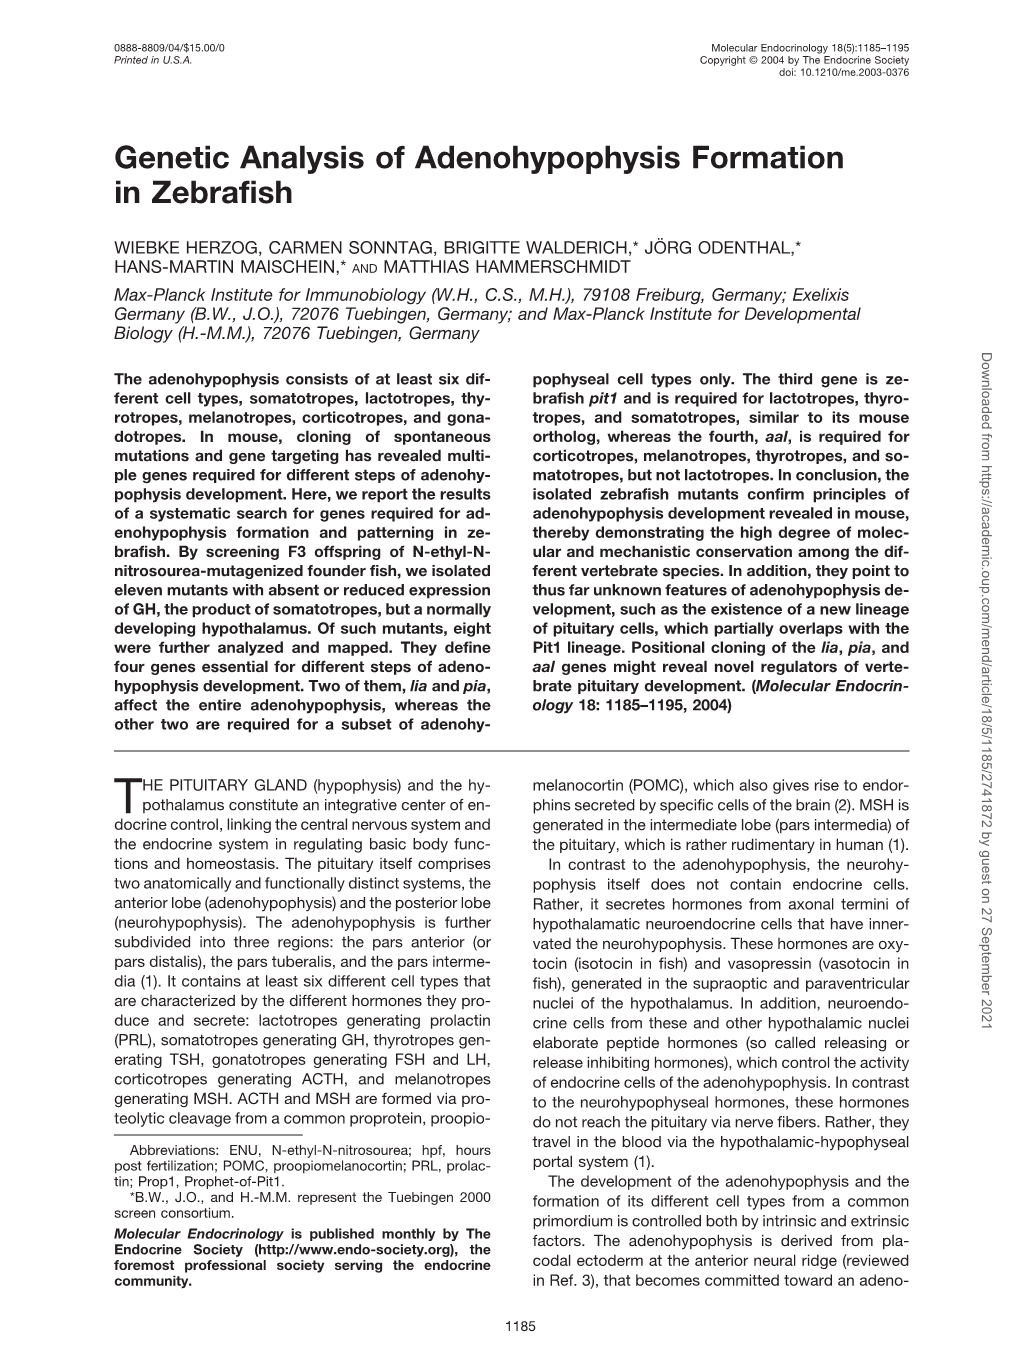 Genetic Analysis of Adenohypophysis Formation in Zebrafish